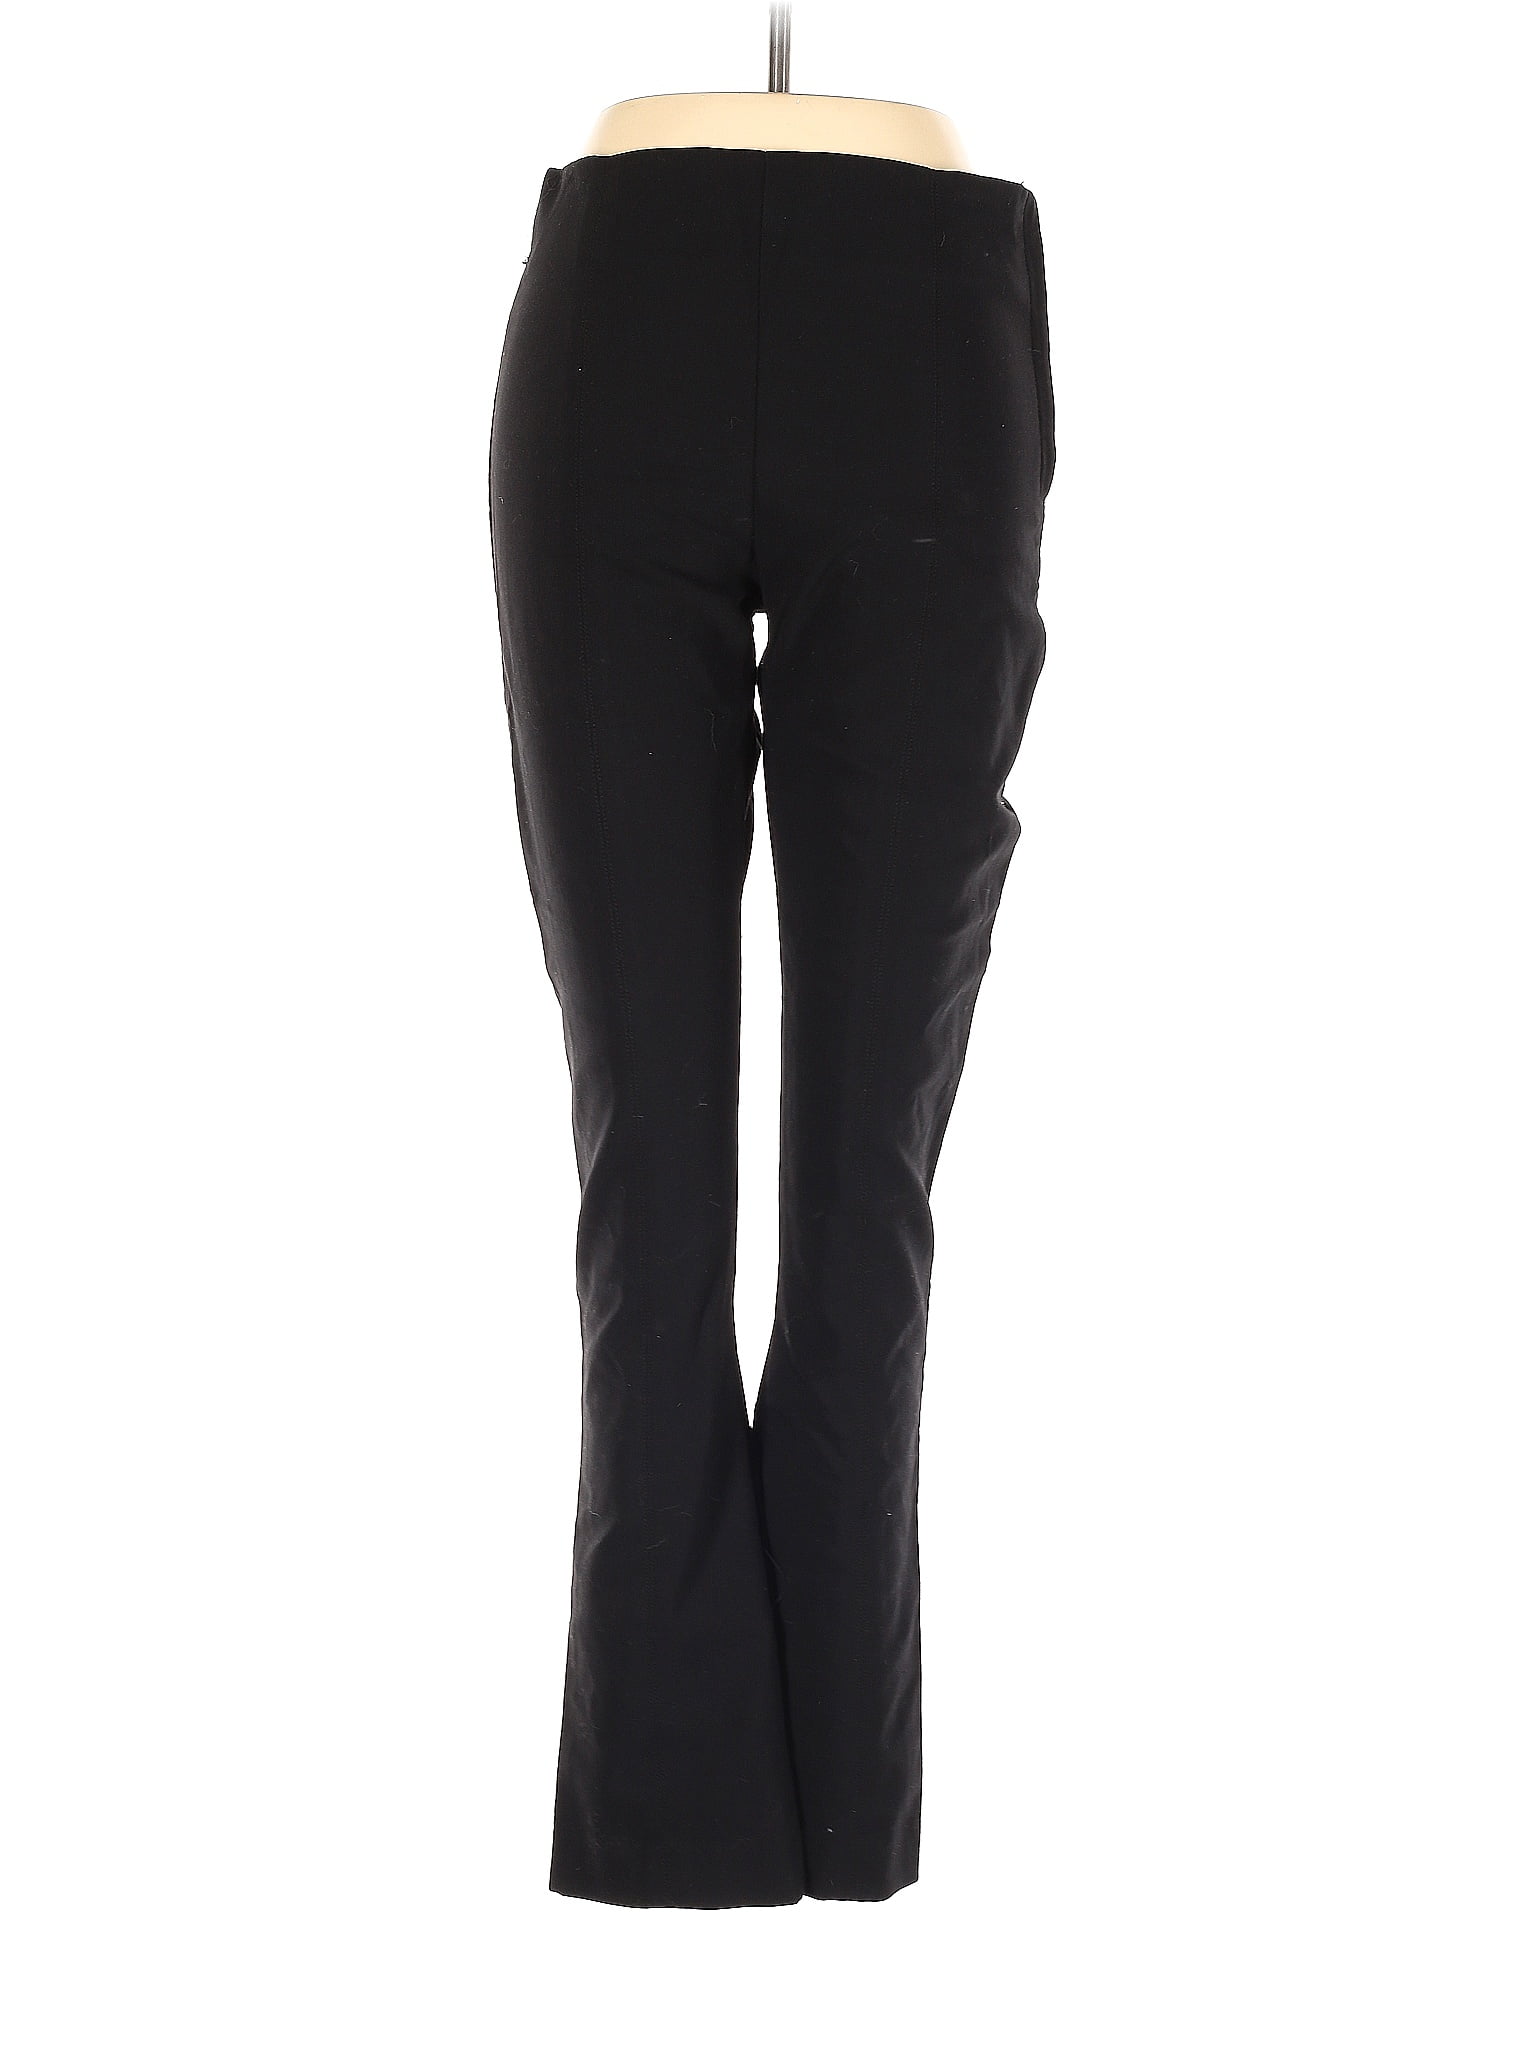 MM. LaFleur Polka Dots Black Casual Pants Size 6 - 74% off | thredUP